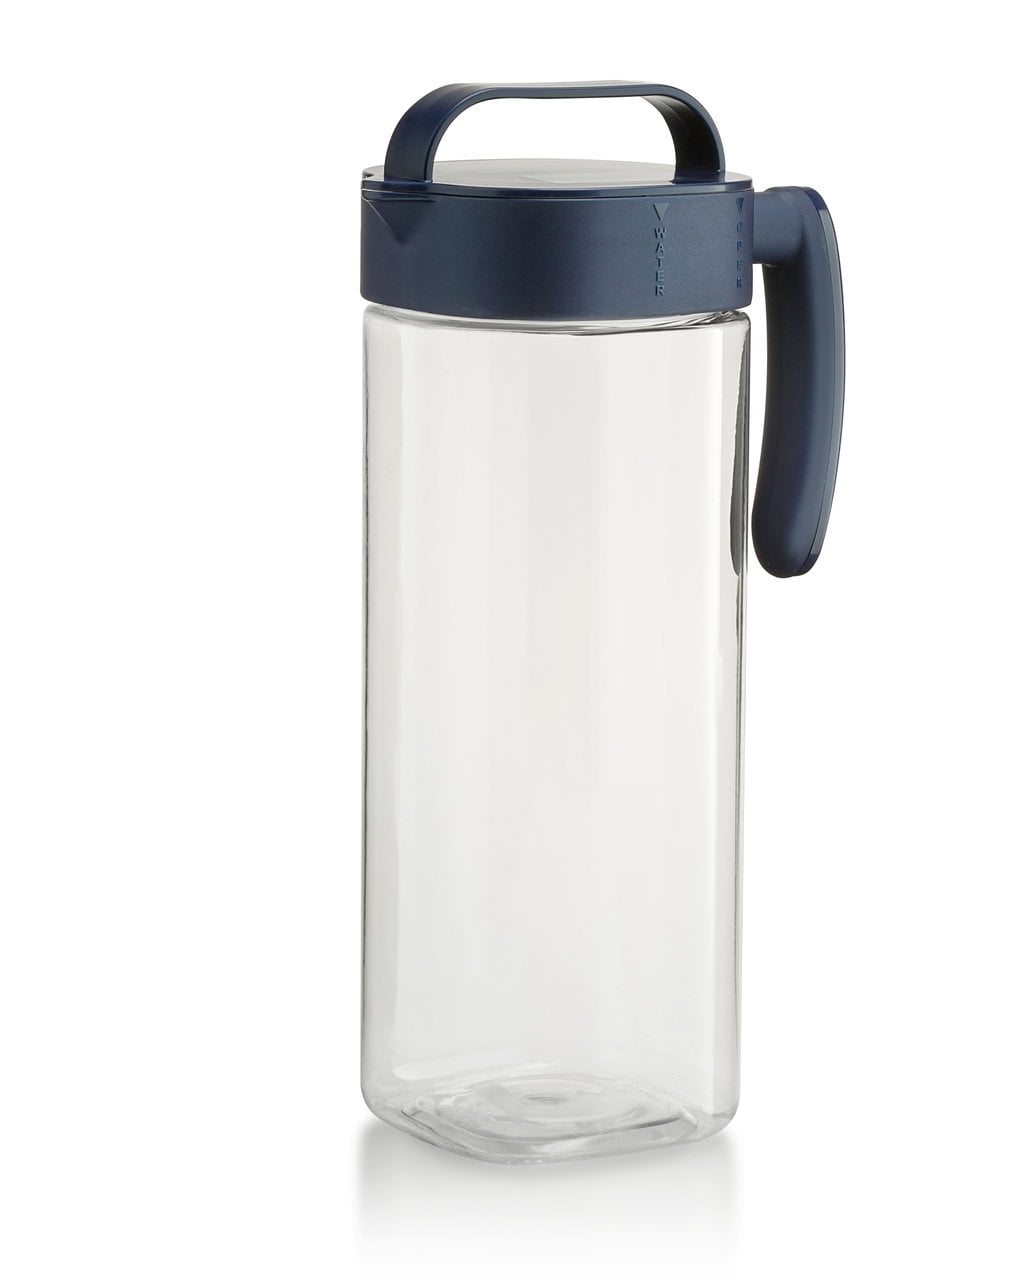 Komax Tritan Clear Large (2.1 quart) Iced Tea Maker with Airtight Lid Twist & Pour - BPA-Free Pitcher